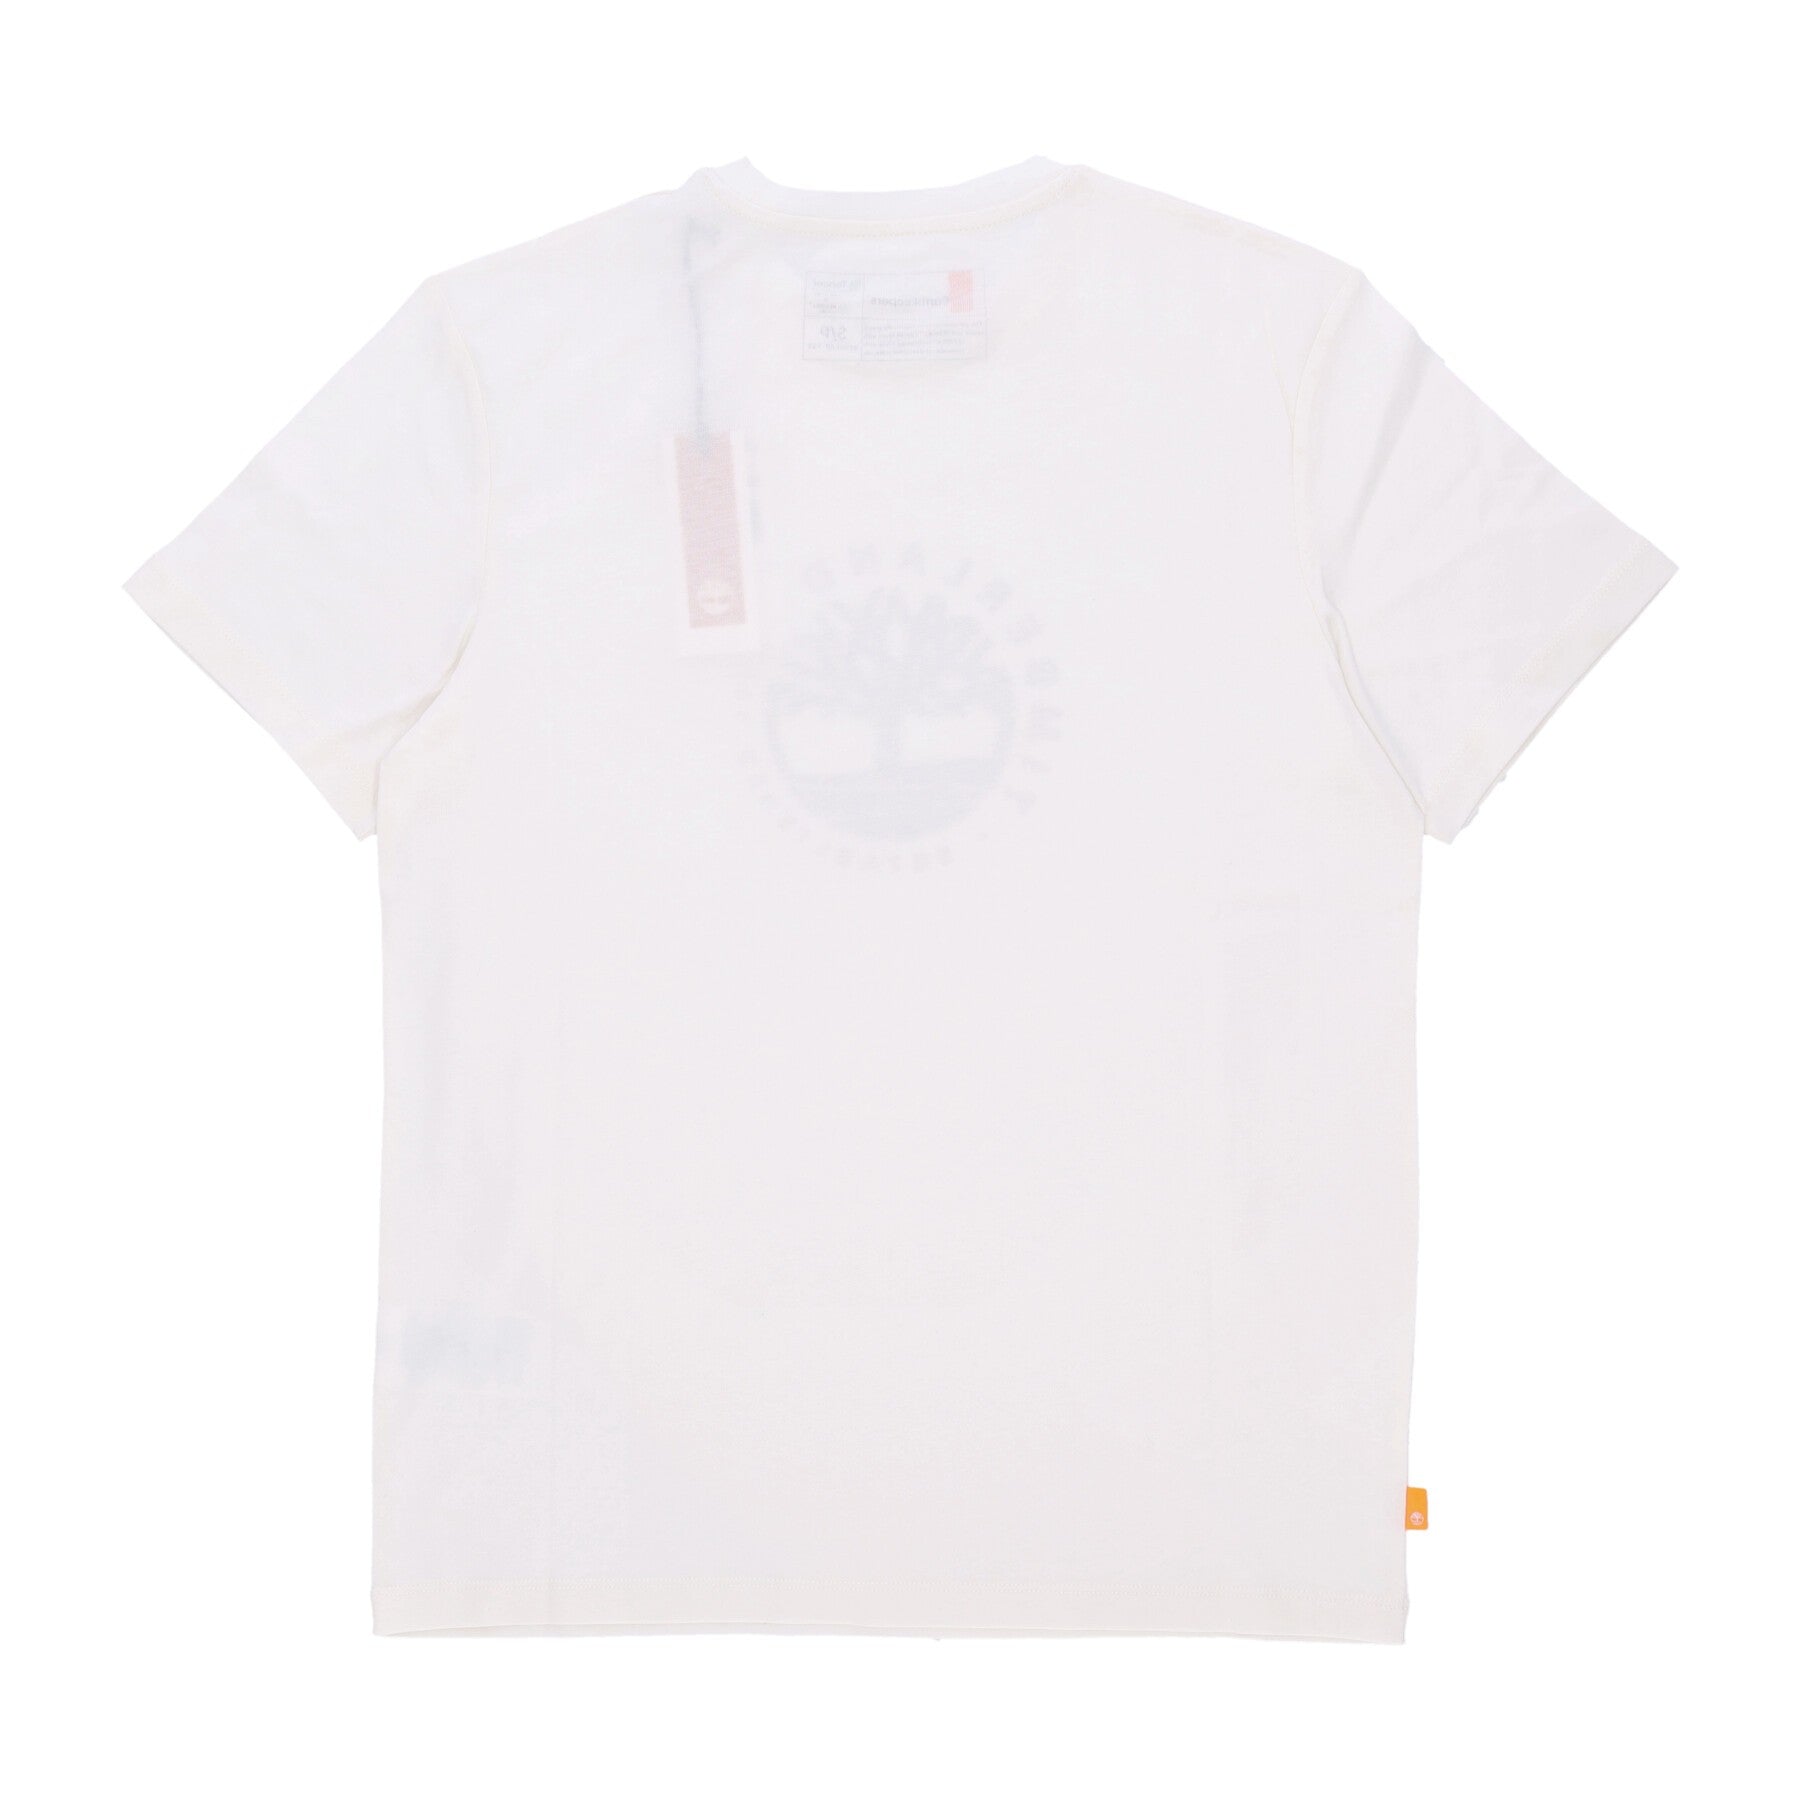 Refibra Graphic Tee Men's T-Shirt Vintage White